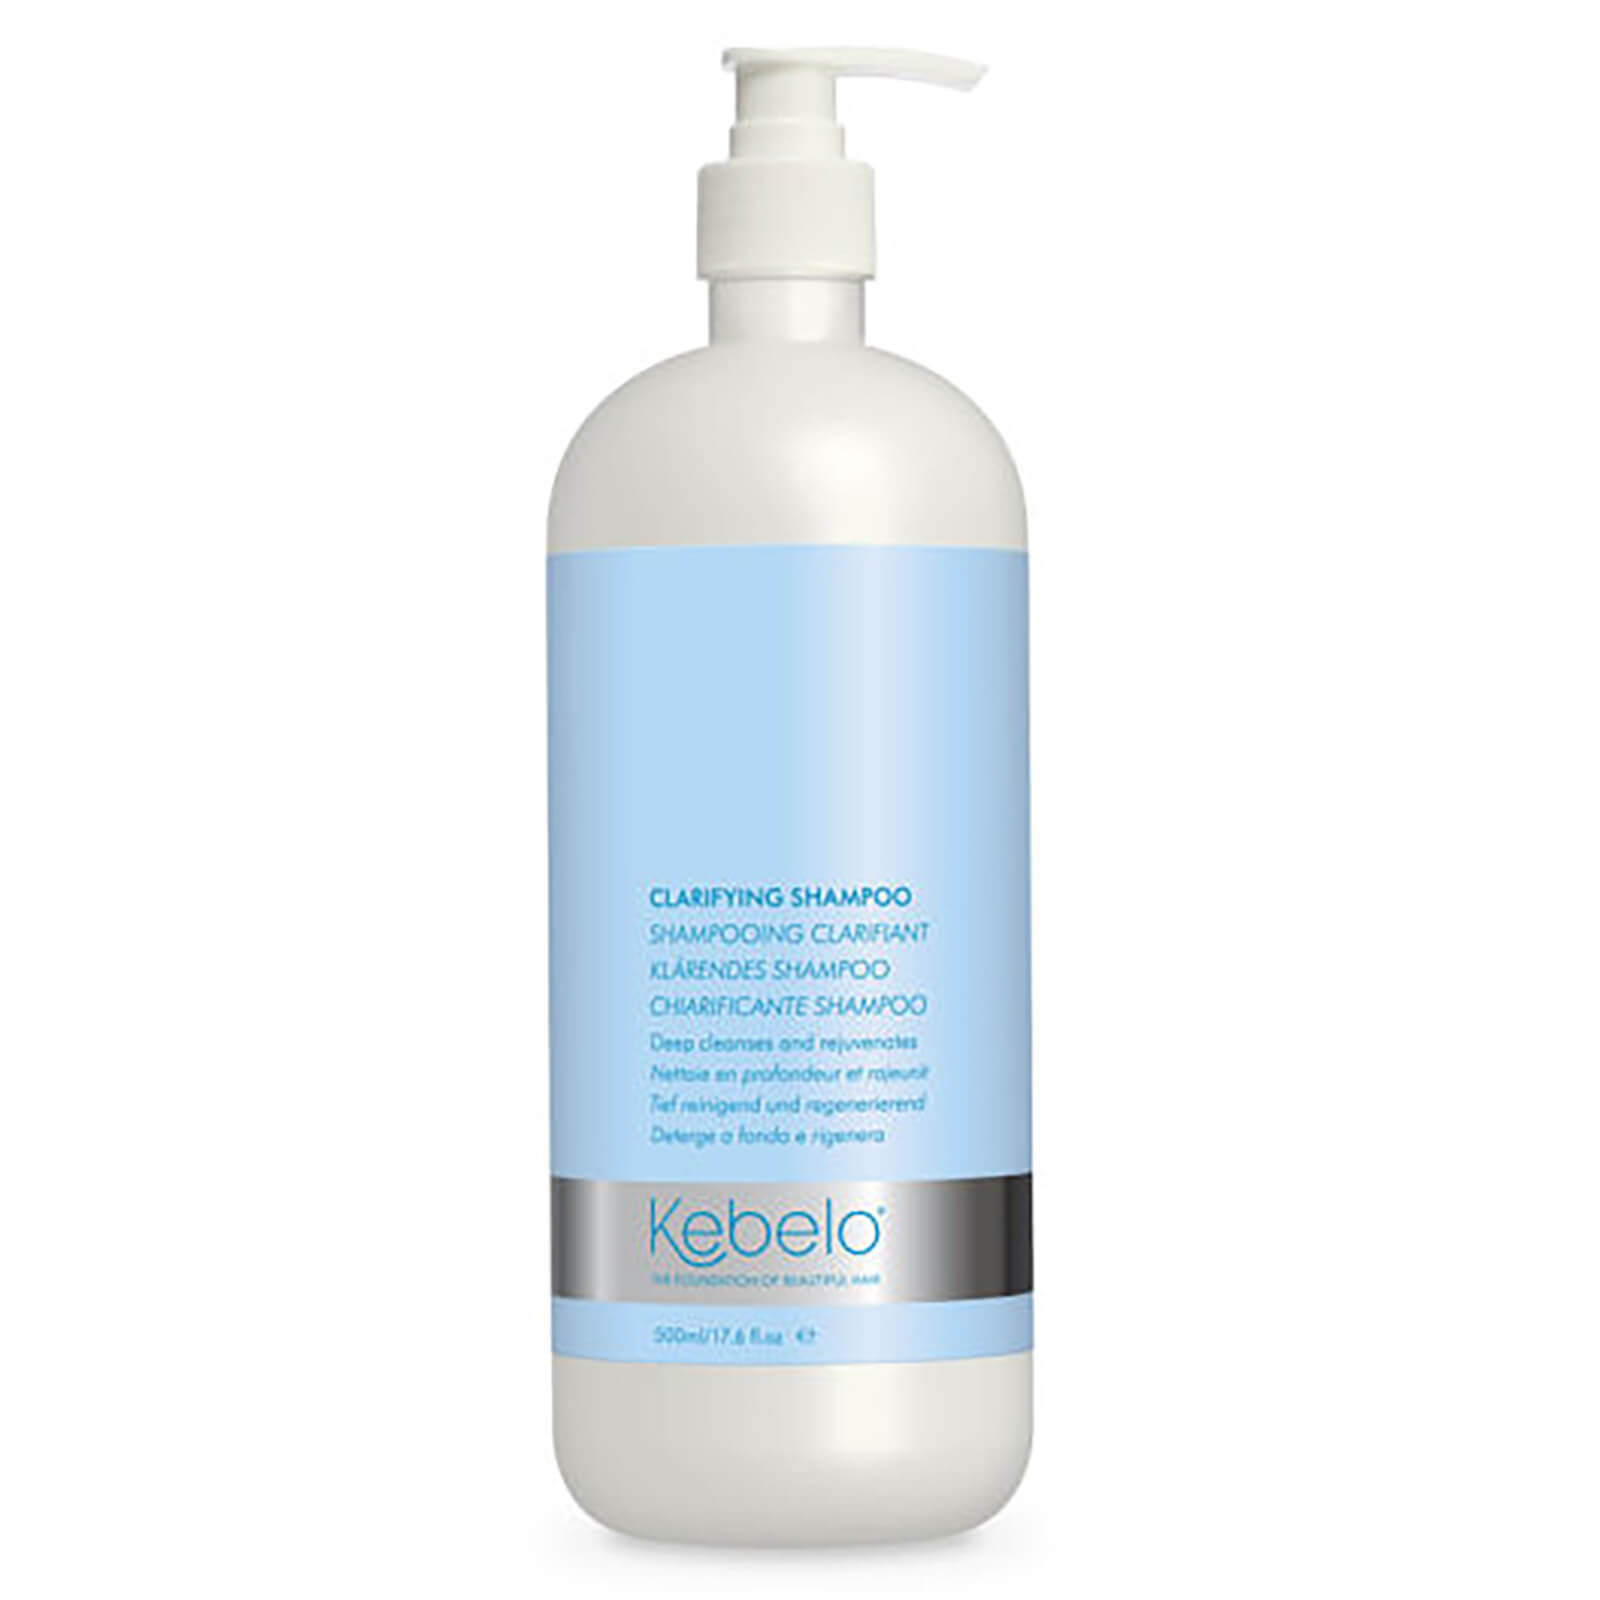 Kebelo Clarifying Shampoo (500ml)